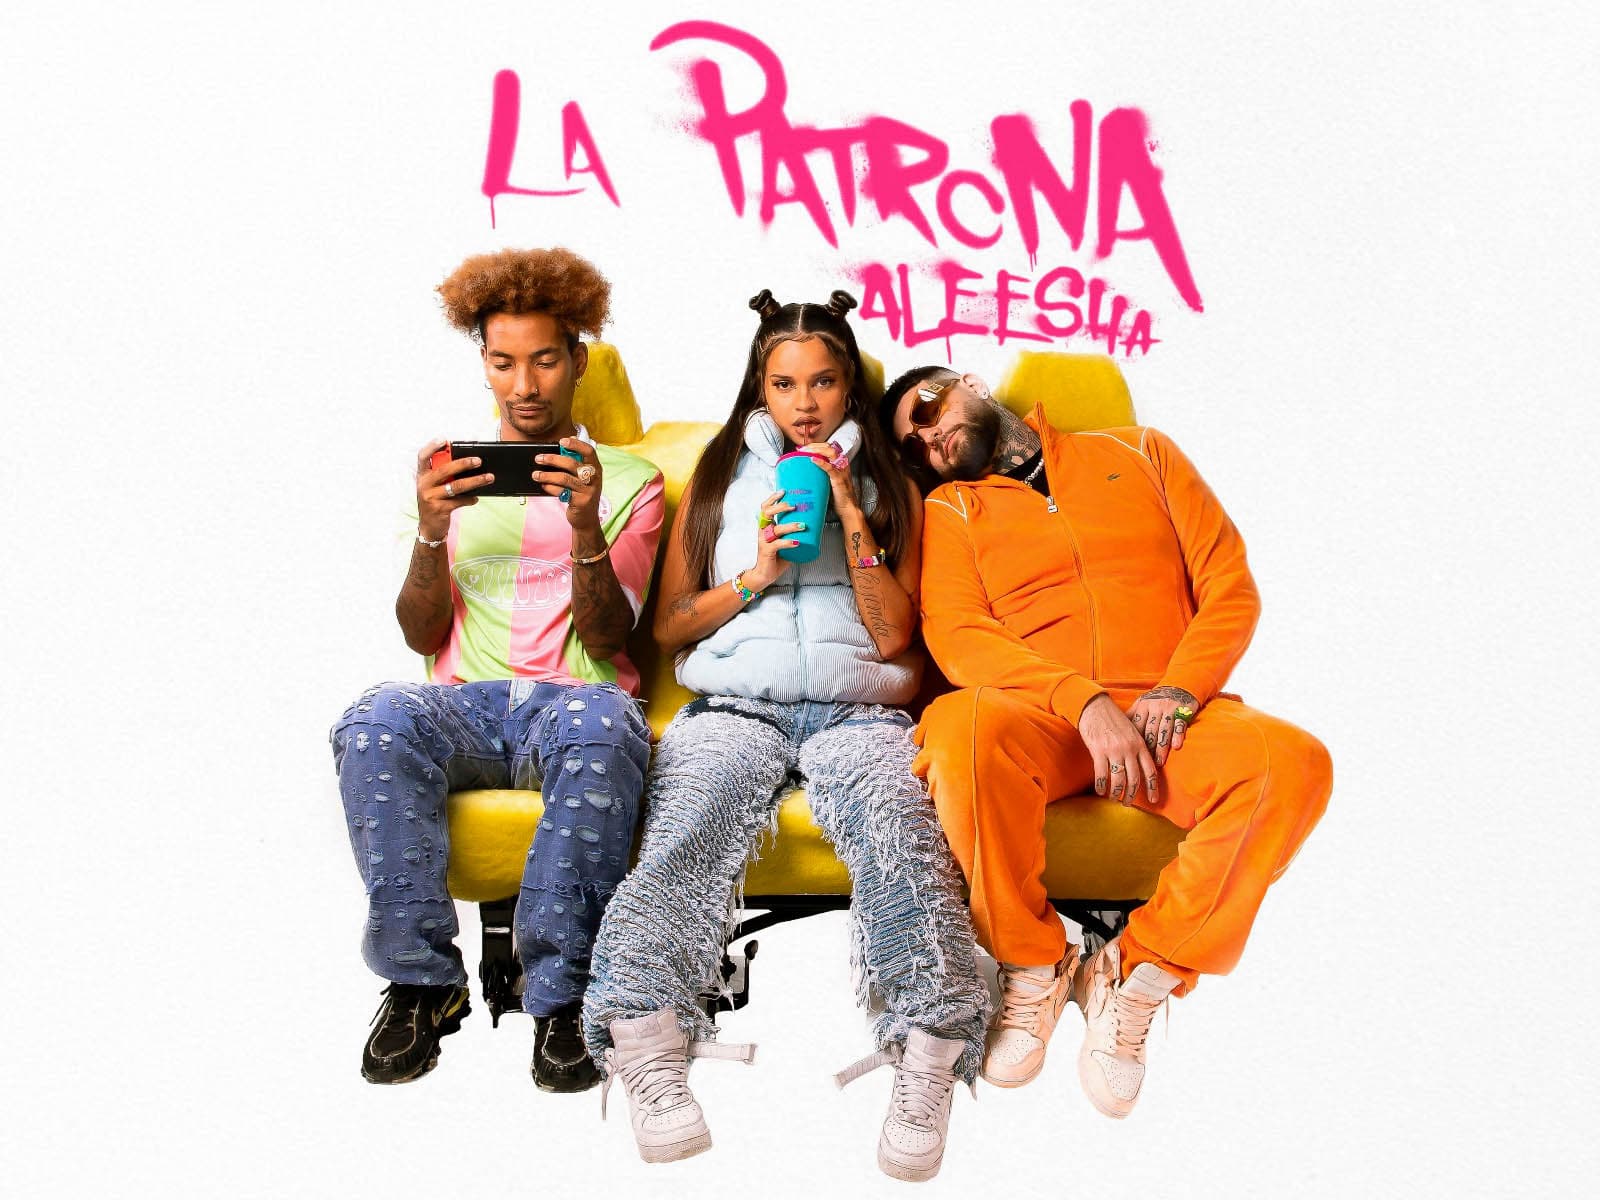 Aleesha announces dates for “La Patrona” in Madrid and Barcelona